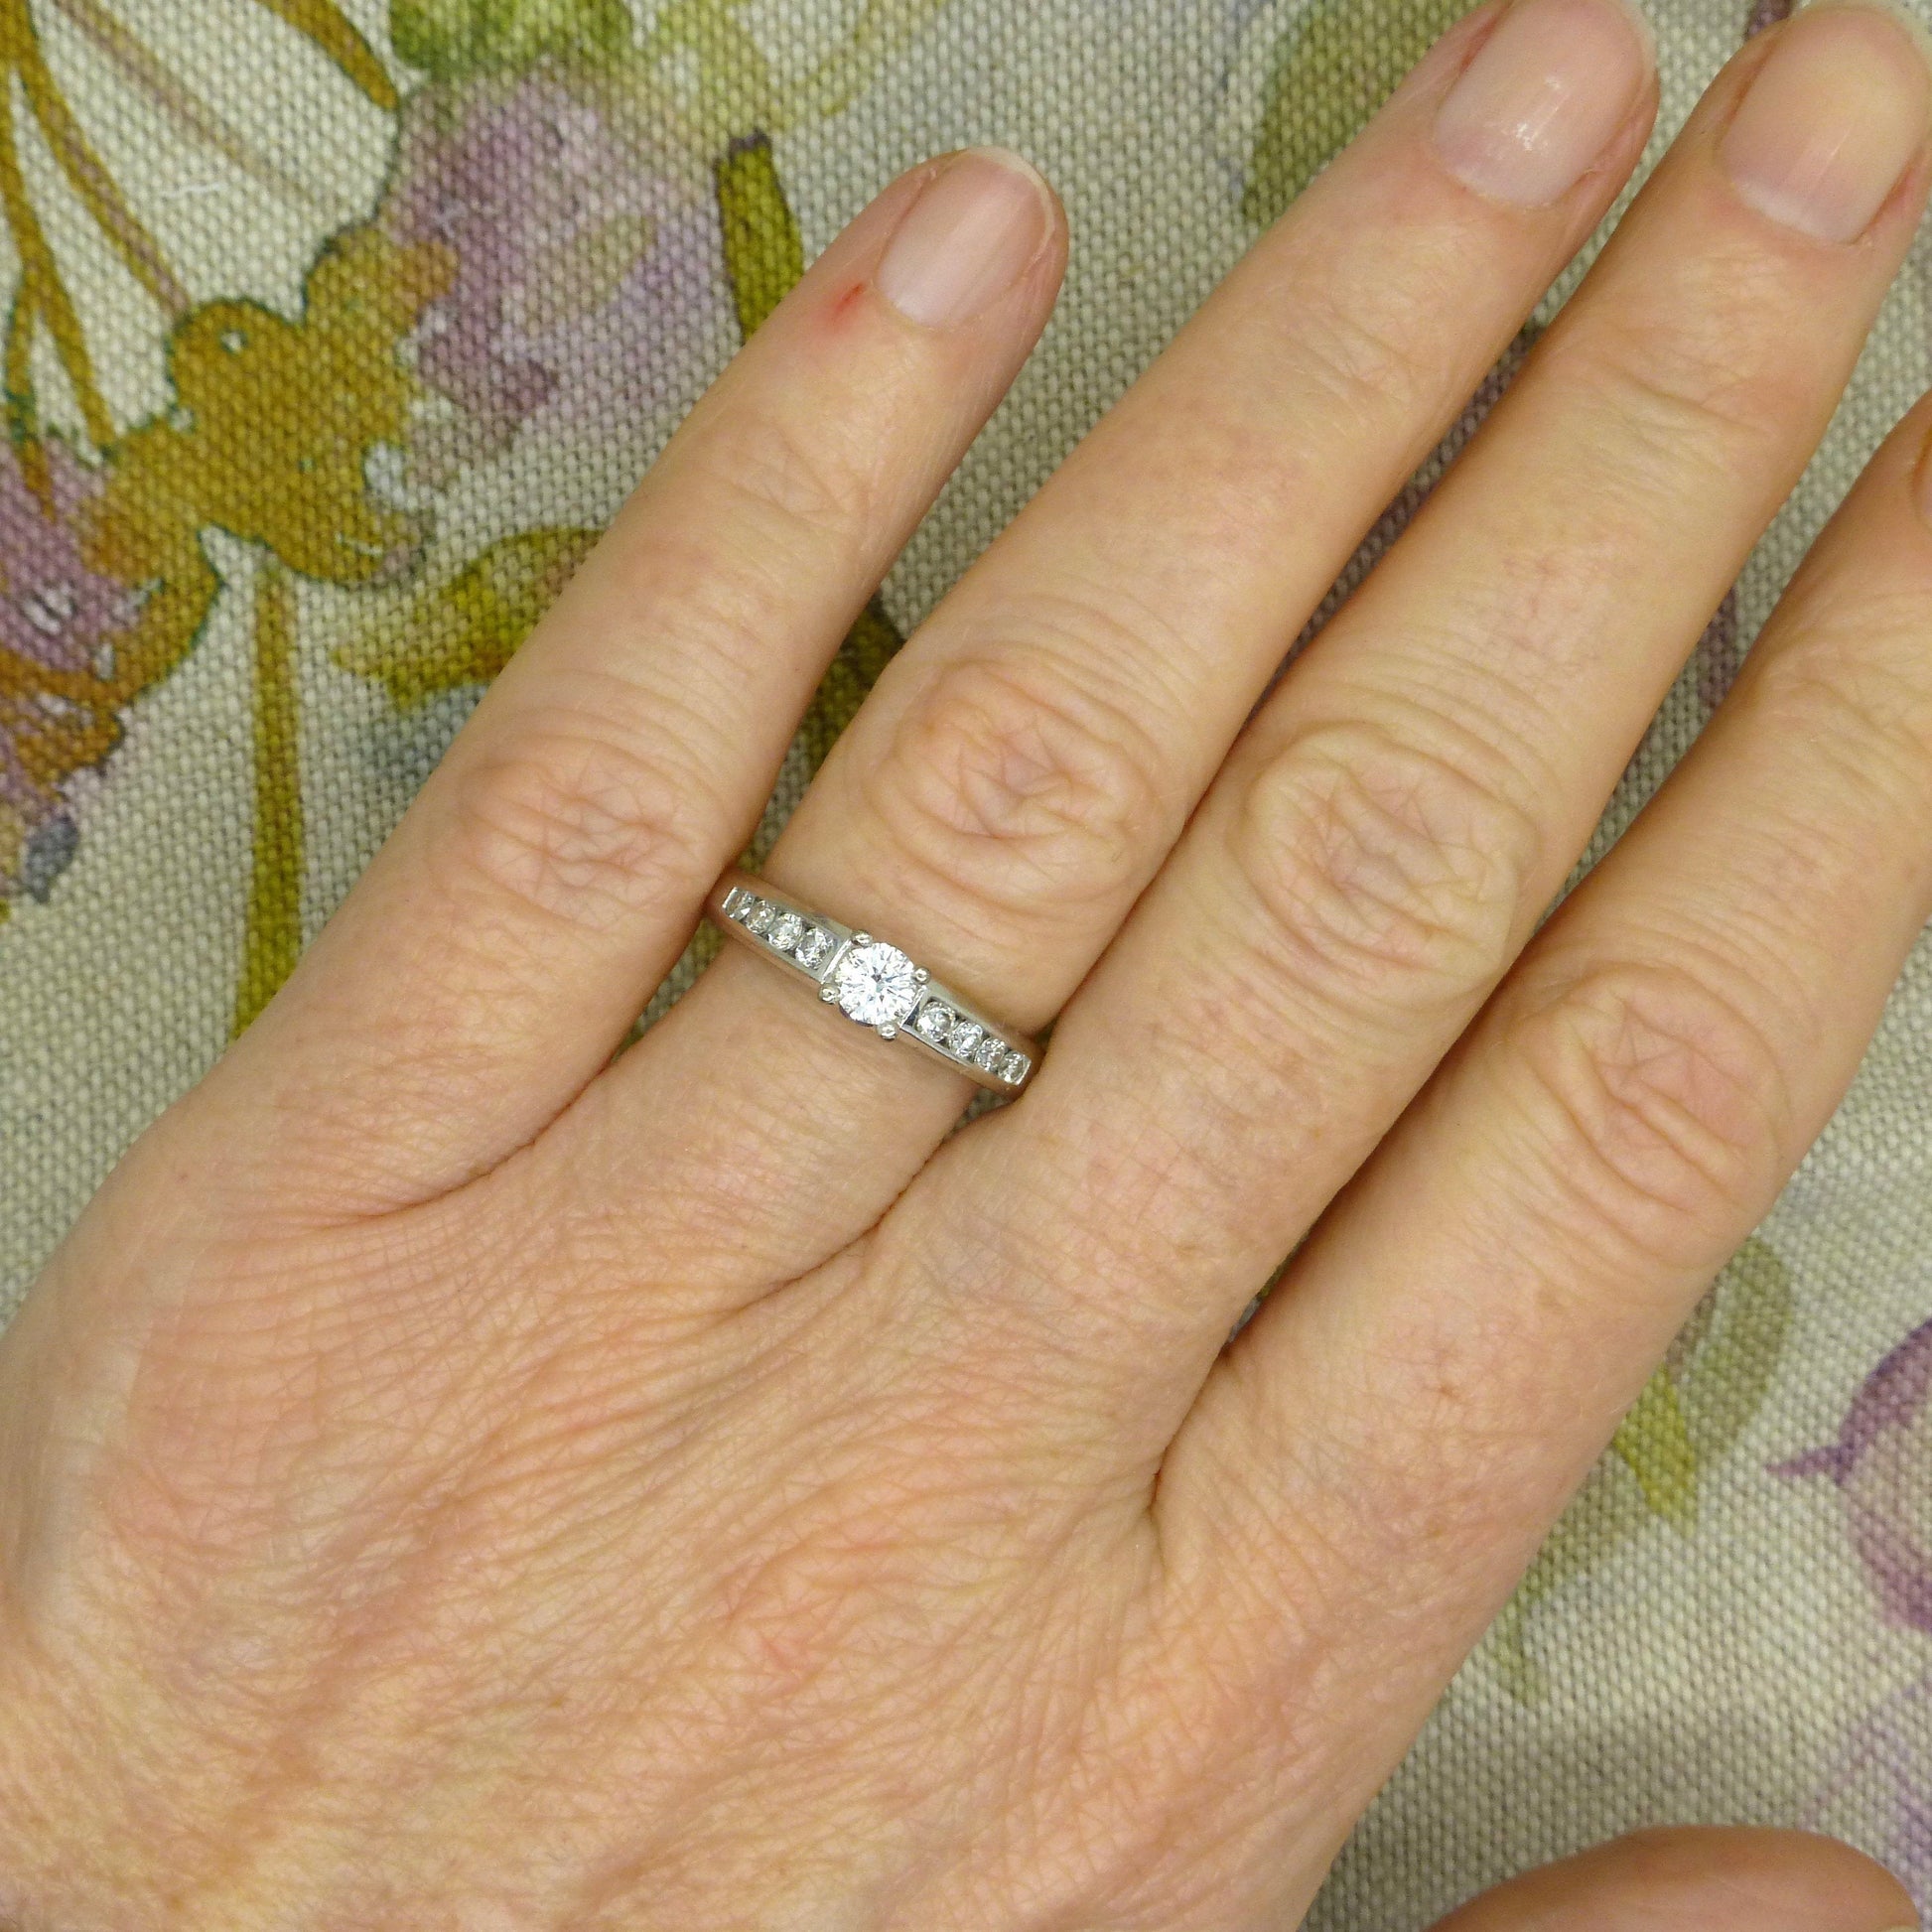 Vintage 18ct white gold Diamond solitaire engagement ring 0.50 carat